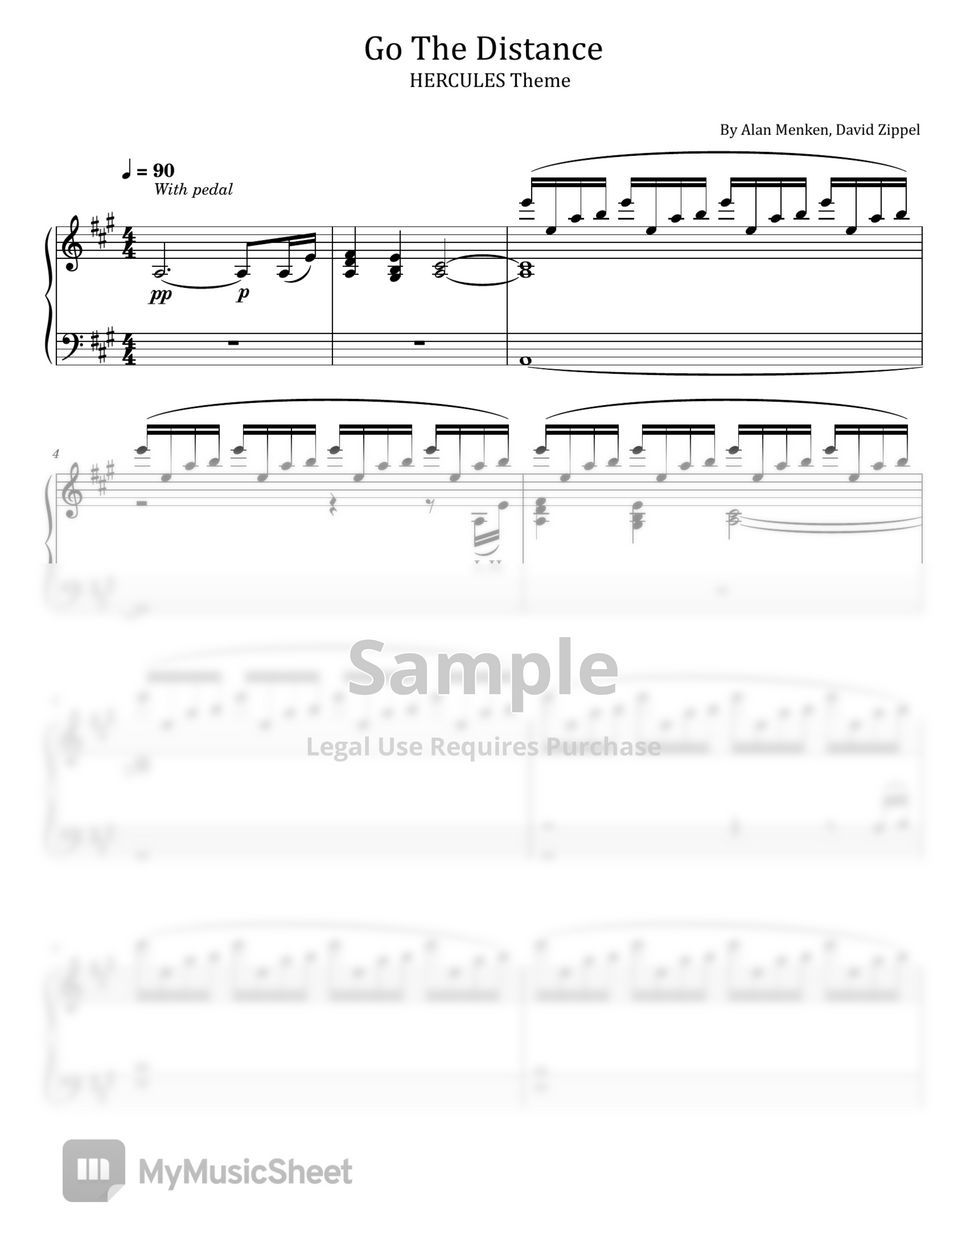 Alan Menken, David Zippel - Go The Distance (Disney's HERCULES Theme - For Piano Solo - With Lyrics) by poon